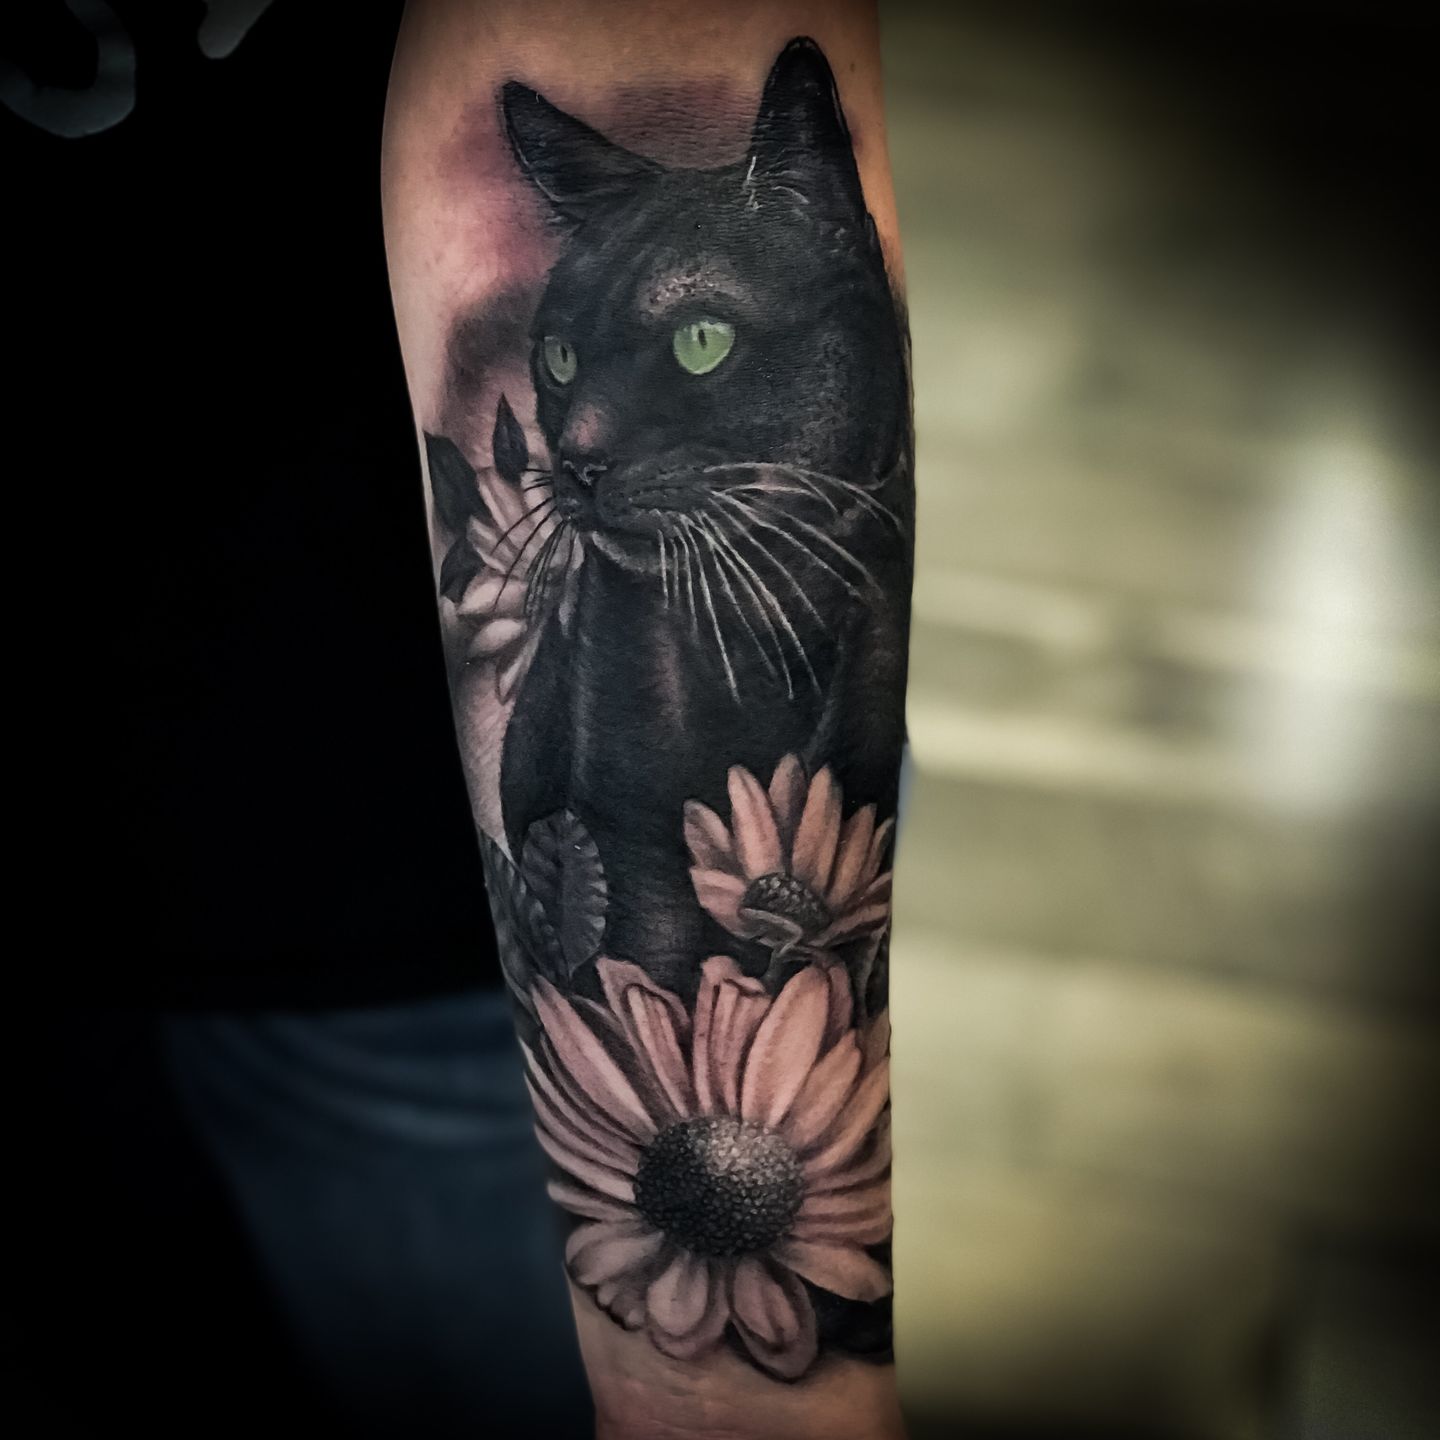 Tetinu Tattoo  Realistic cat done by Raisa Busuttil for  Facebook